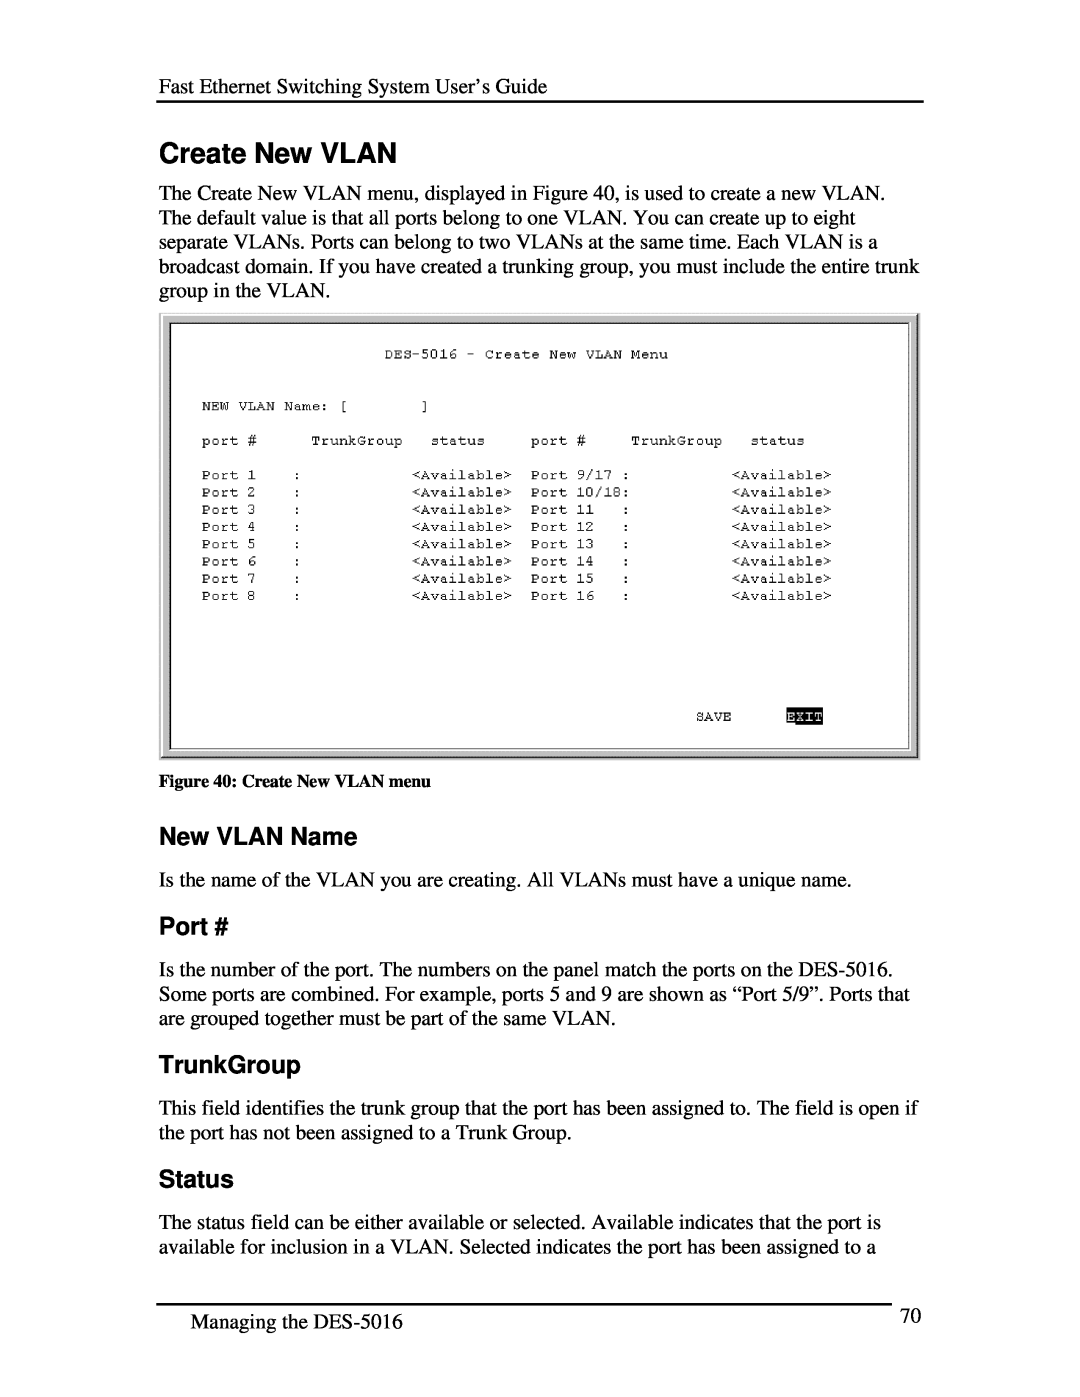 D-Link DES-5016 manual Create New VLAN, New VLAN Name, Port #, TrunkGroup, Status 